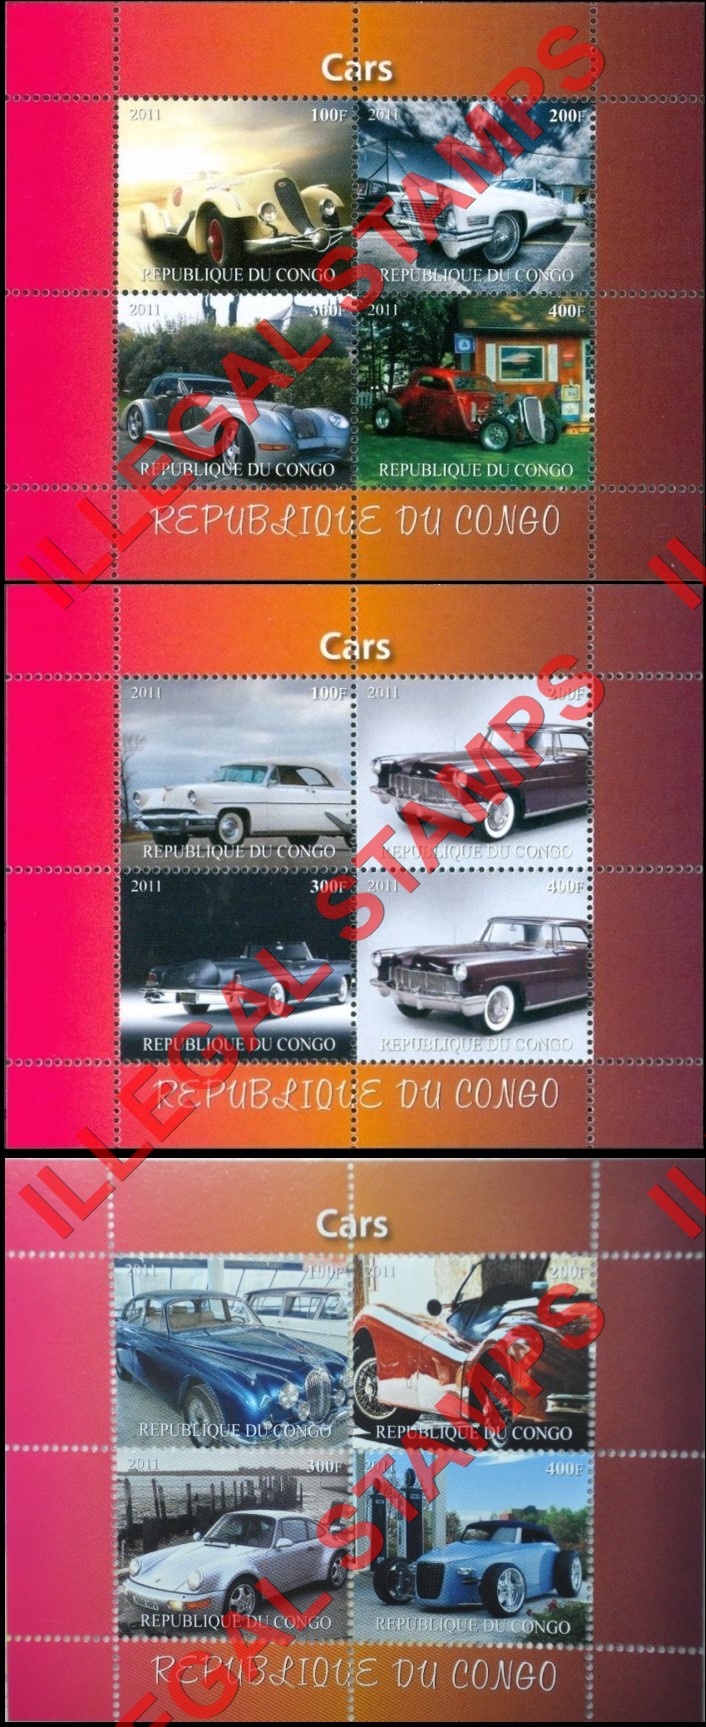 Congo Republic 2011 Cars Illegal Stamp Souvenir Sheets of 4 (Part 2)